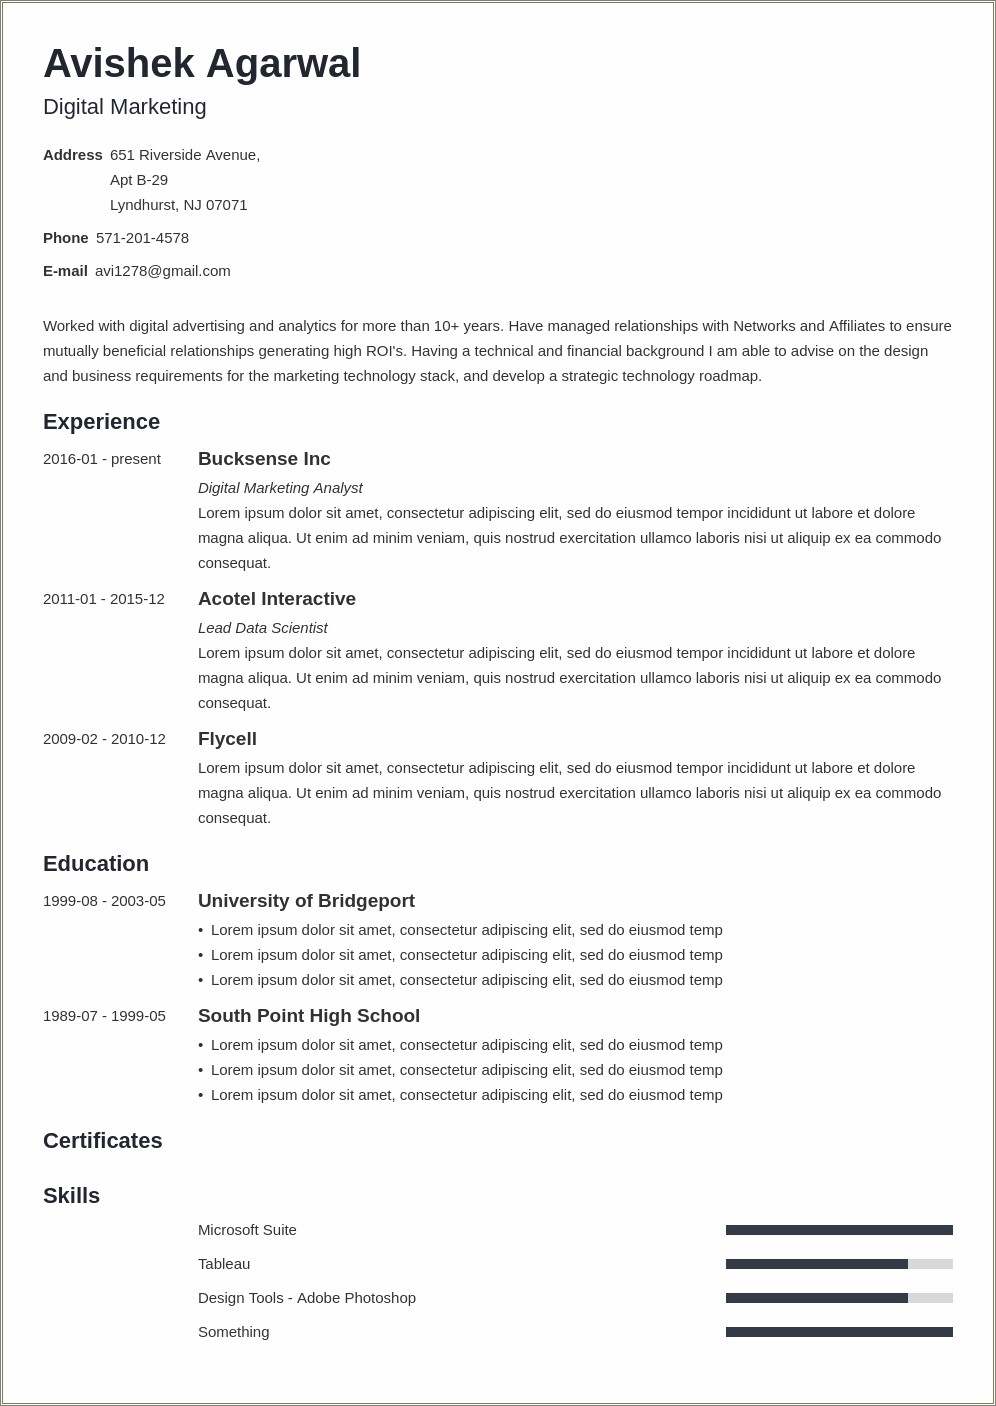 Resume Bio Example For Marketing Job